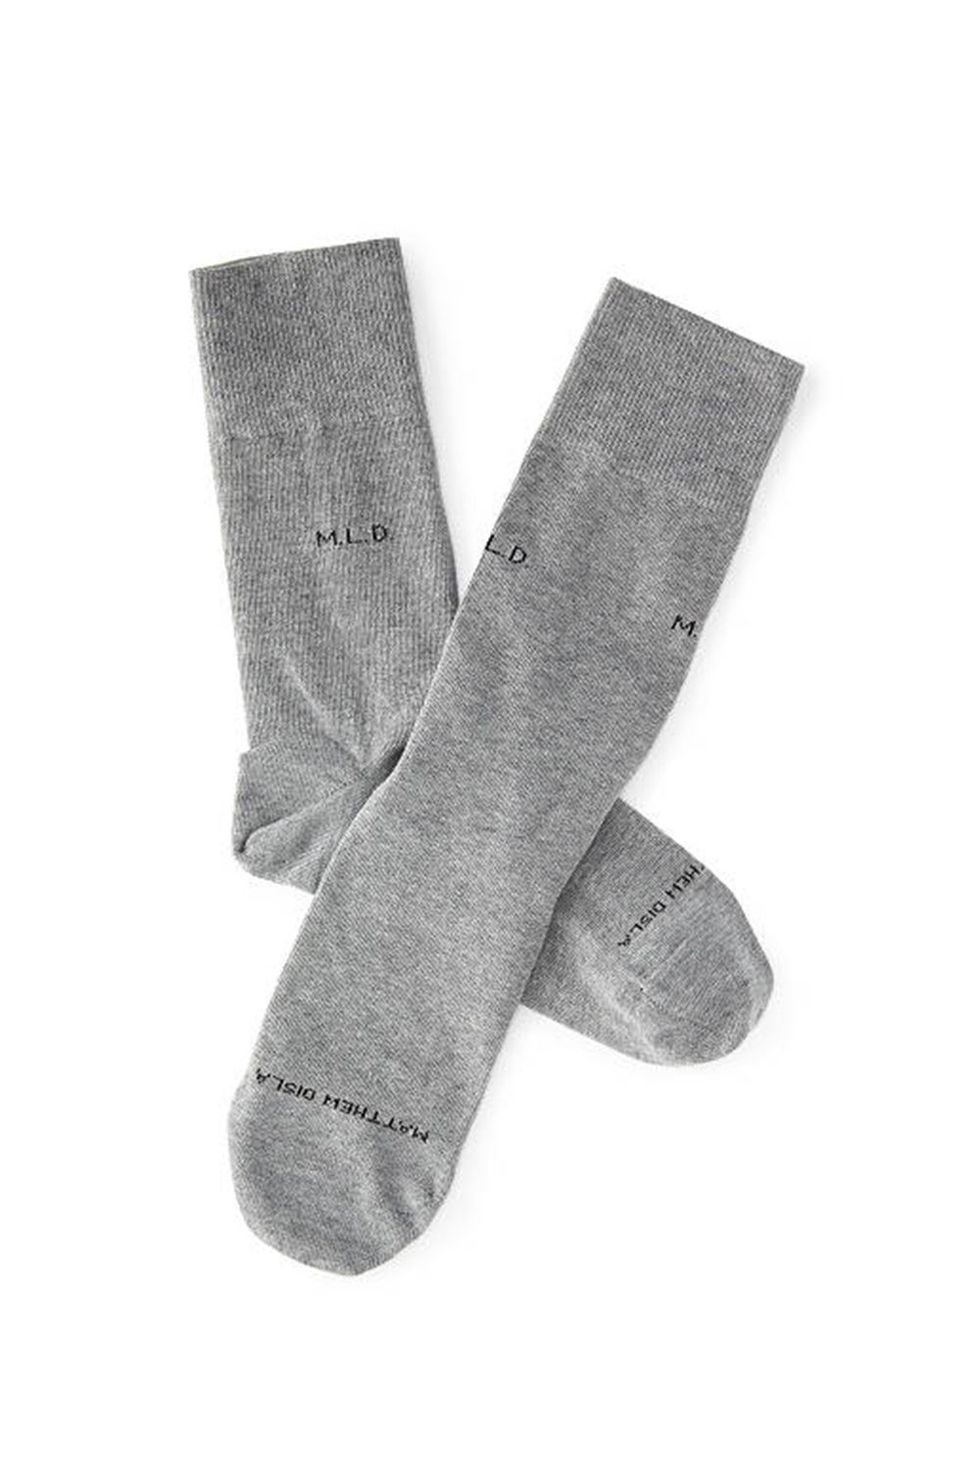 Personalized Socks–Set of 5 